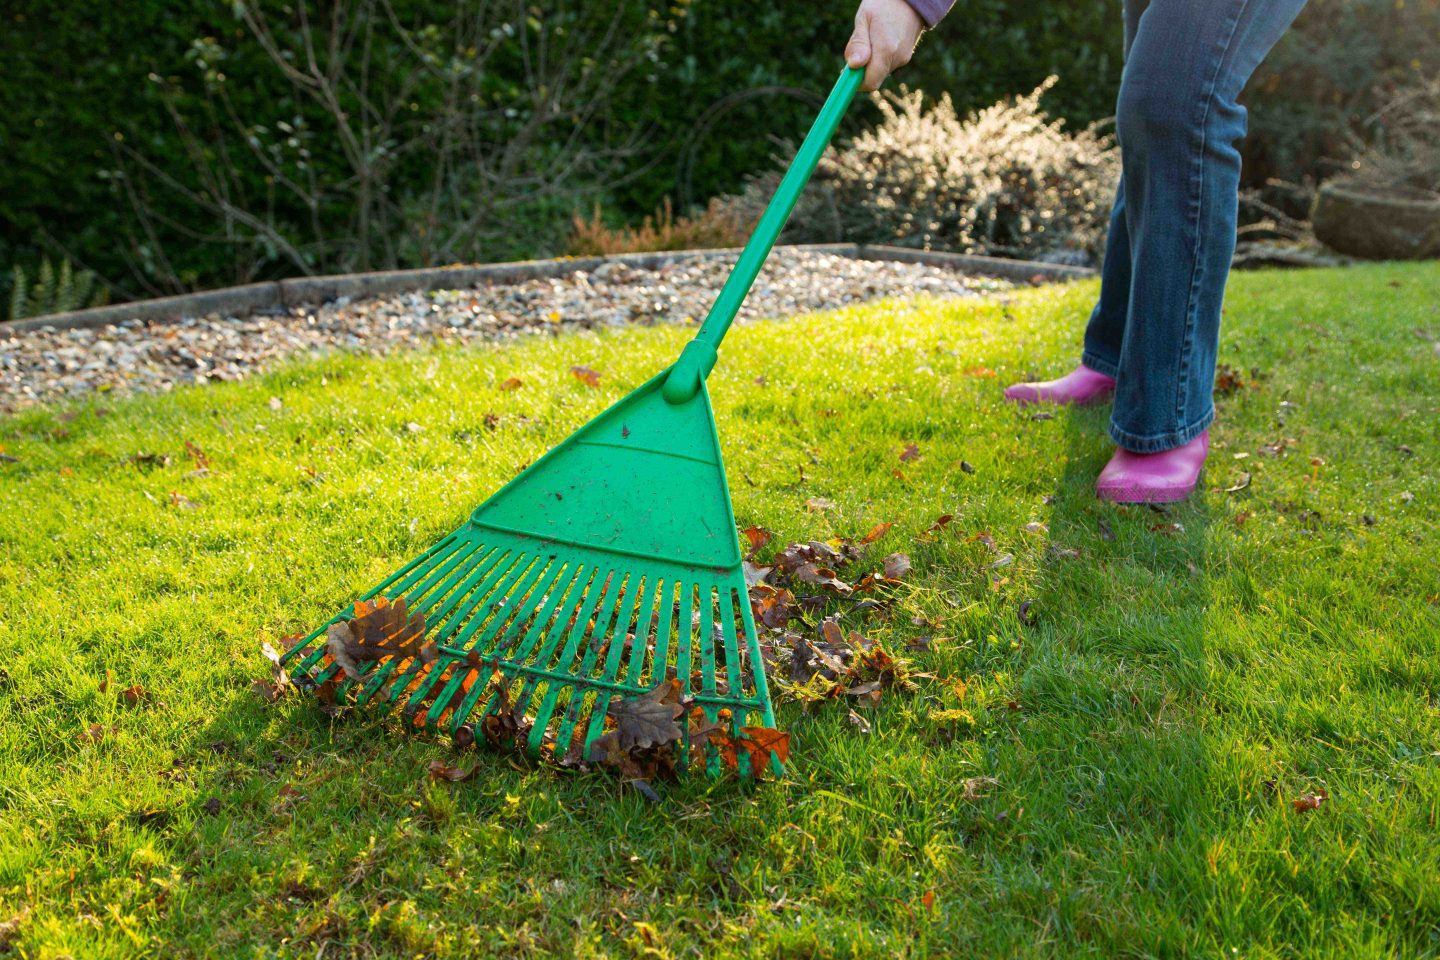 A person rakes leaves using a green leaf rake